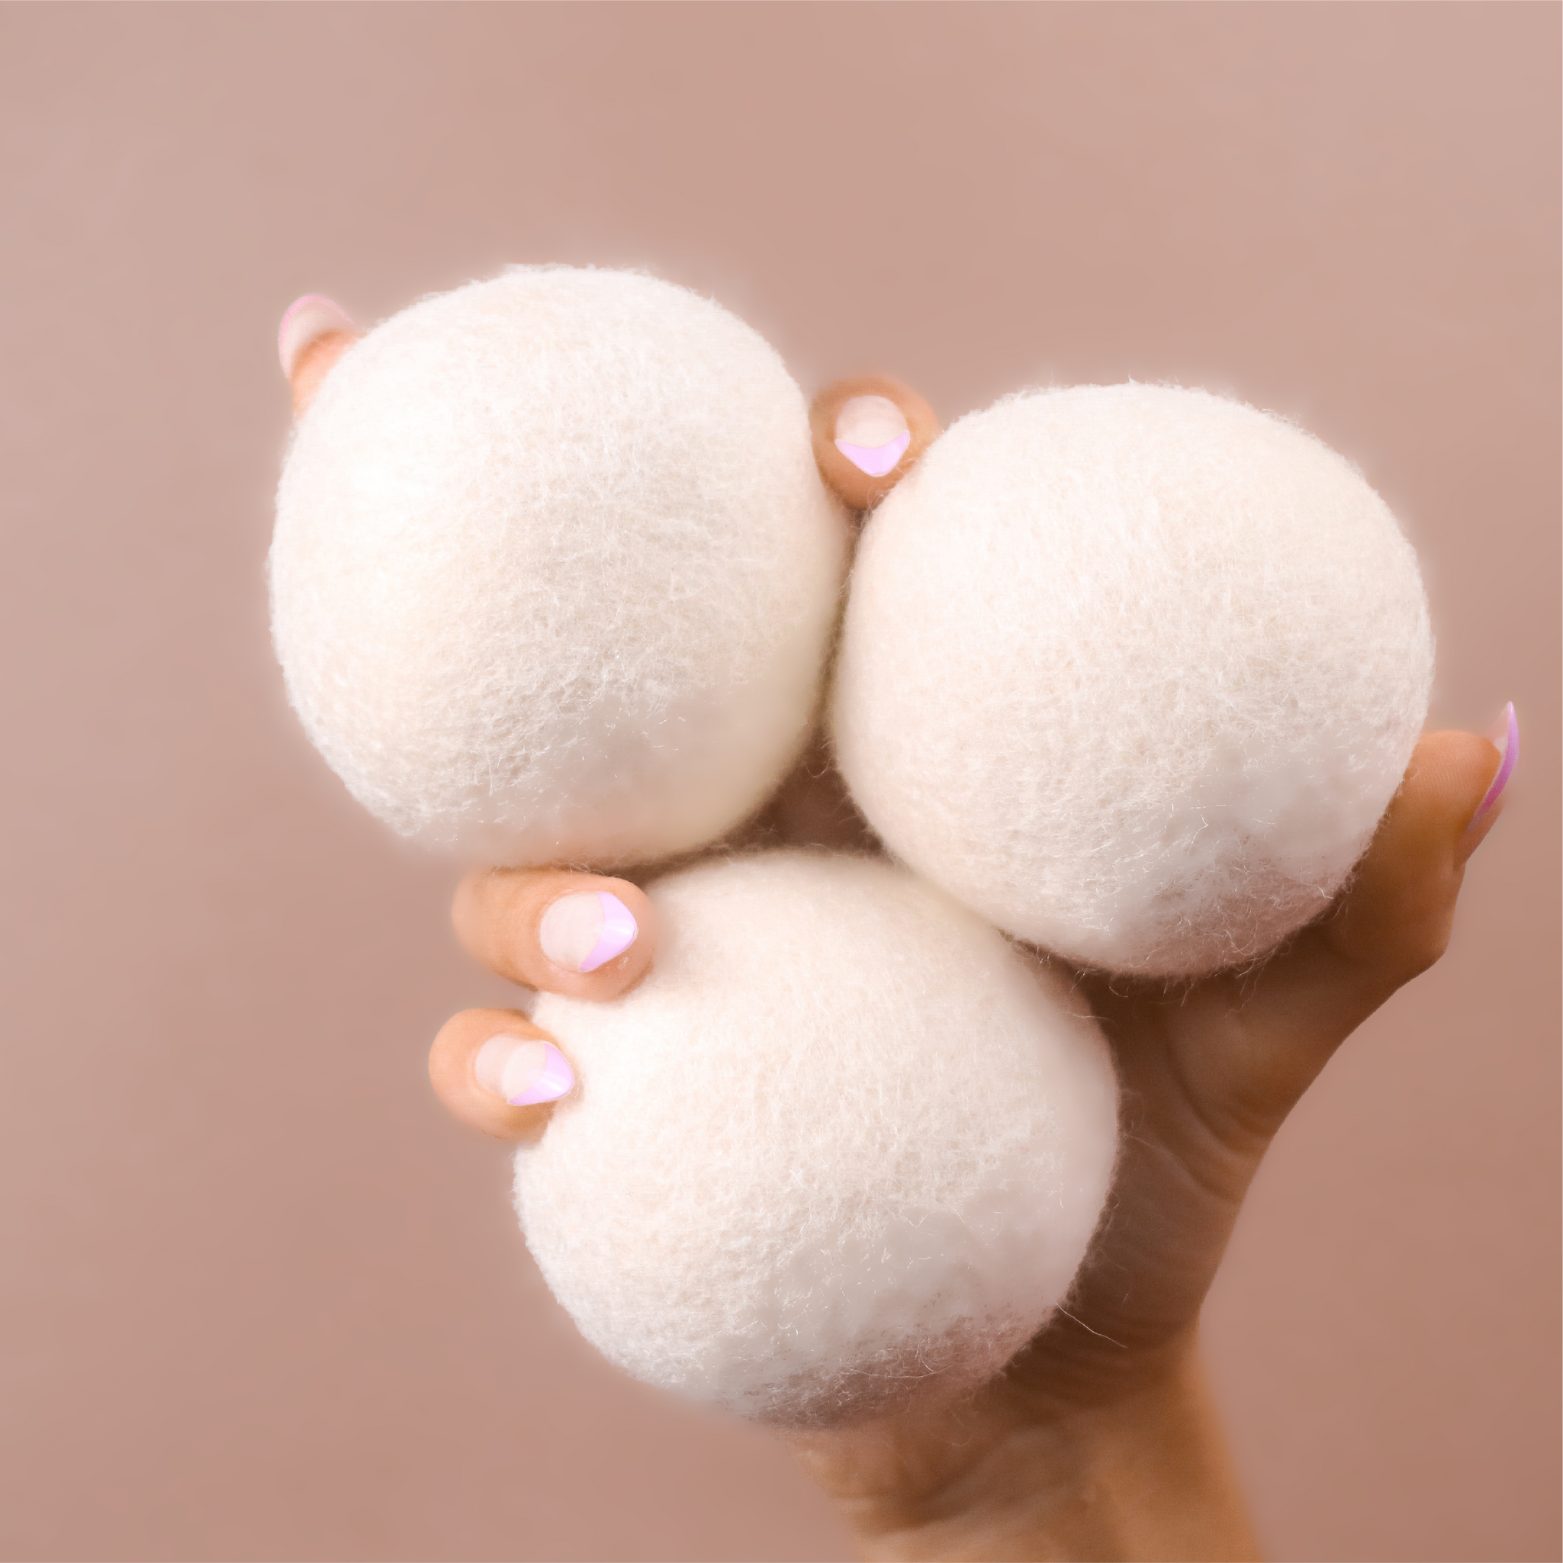 6 Surprising Benefits of Wool Dryer Balls - Kind Laundry